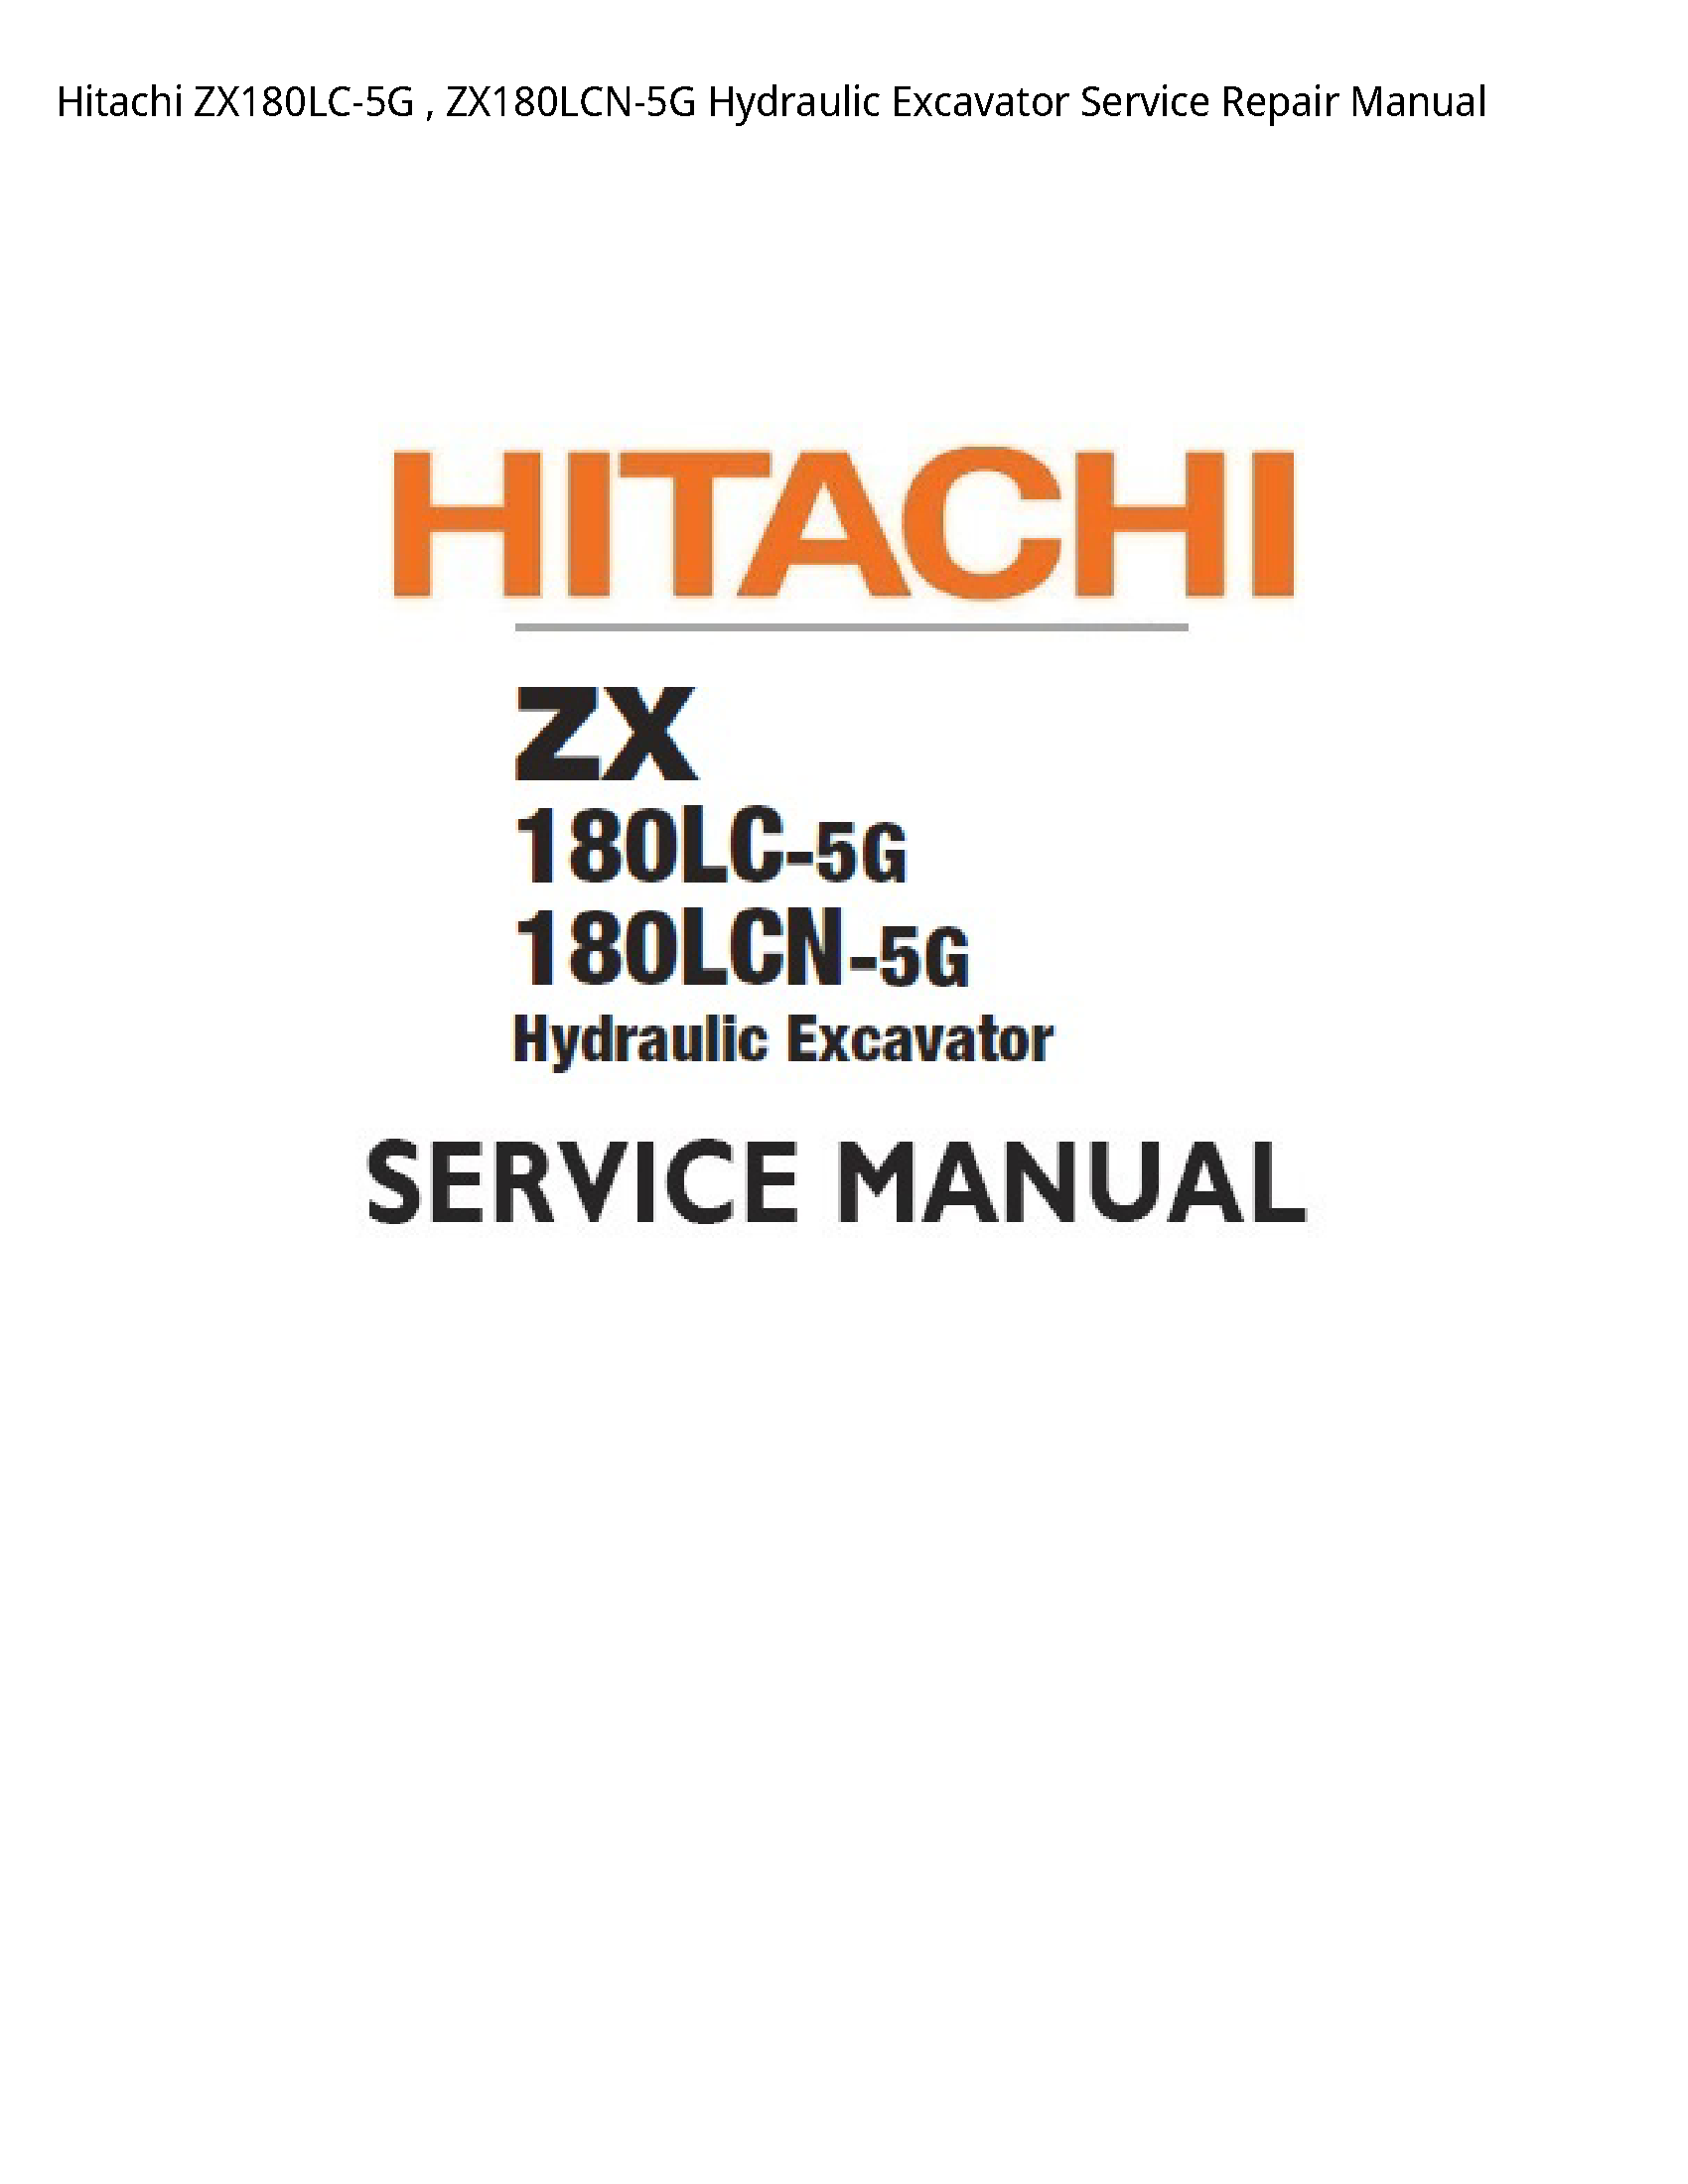 Hitachi ZX180LC-5G Hydraulic Excavator manual